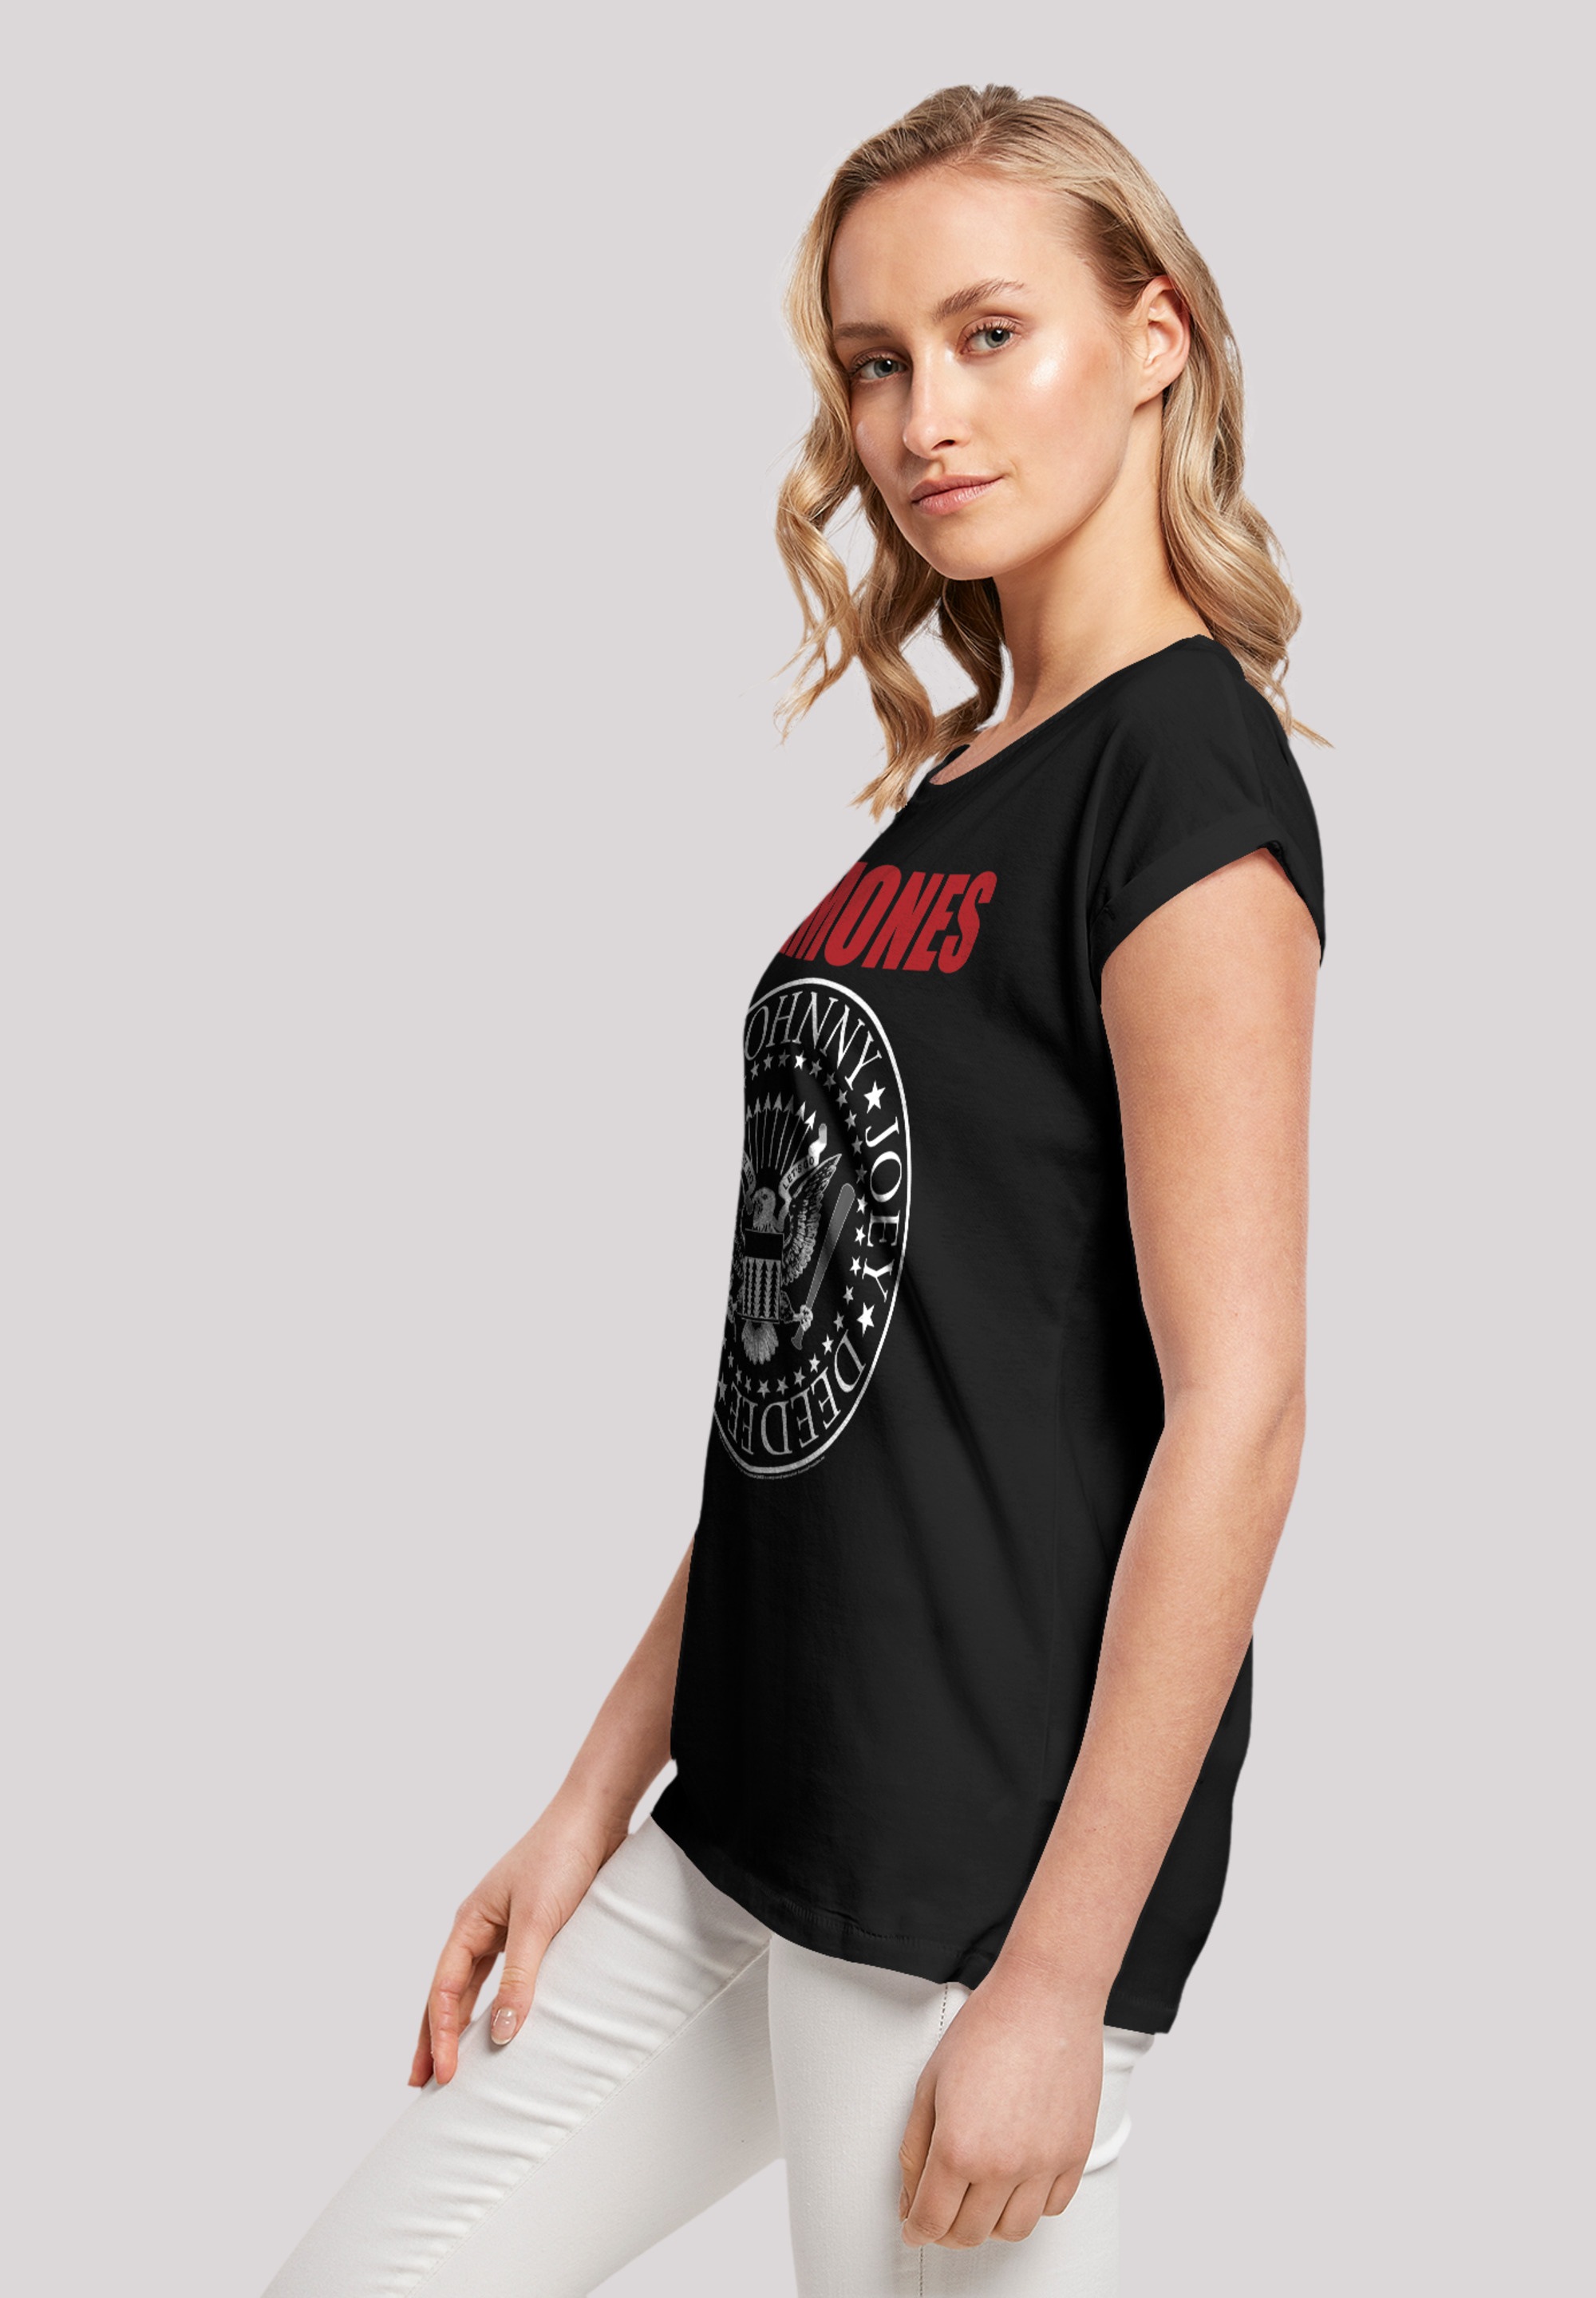 online »Ramones Seal«, Band, Rock kaufen walking Red Rock-Musik Musik I\'m Text T-Shirt | Premium Qualität, Band F4NT4STIC